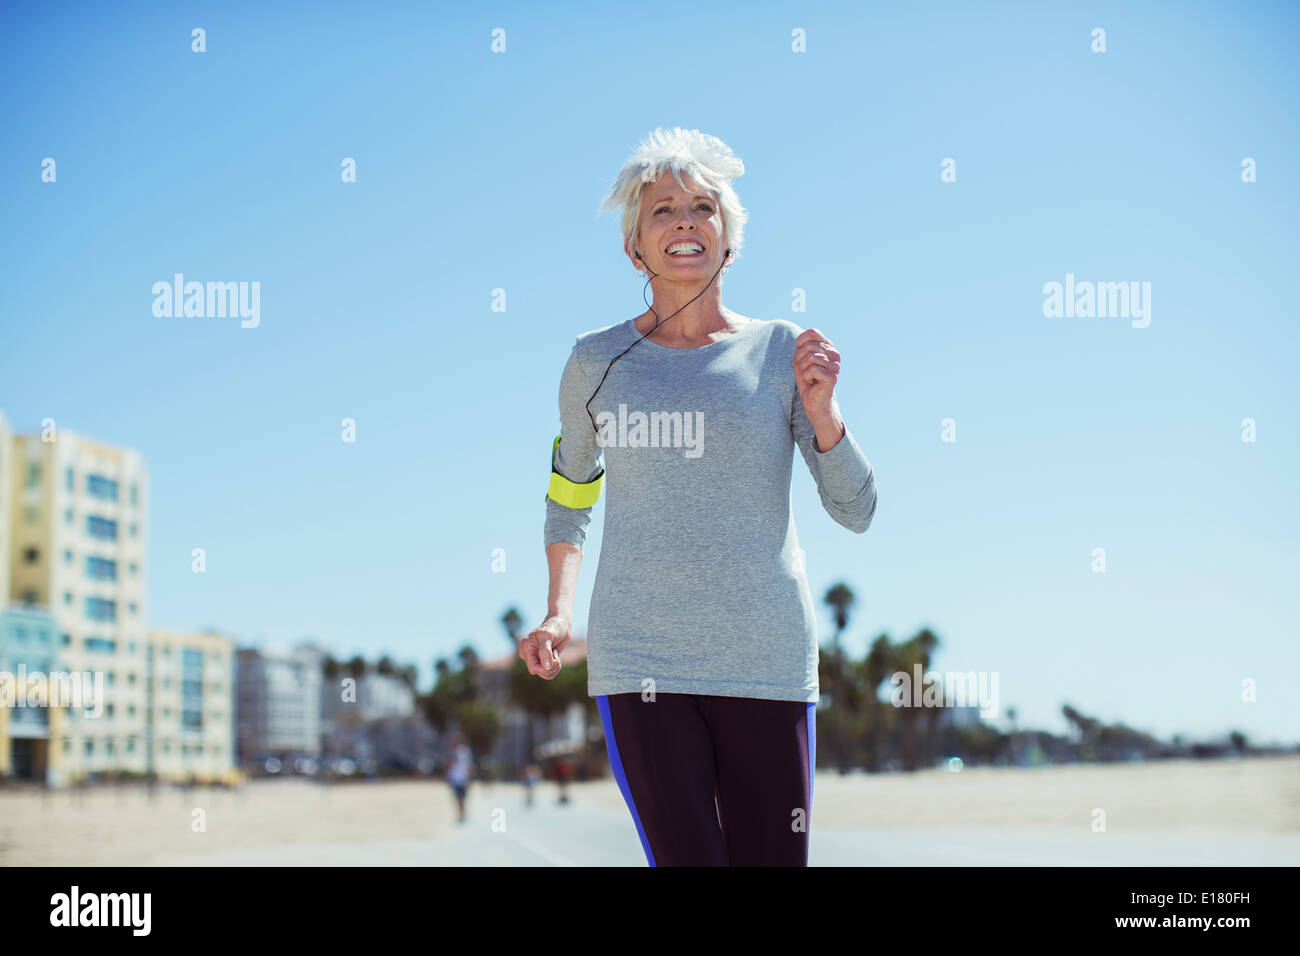 Senior woman power walking on beach Stock Photo